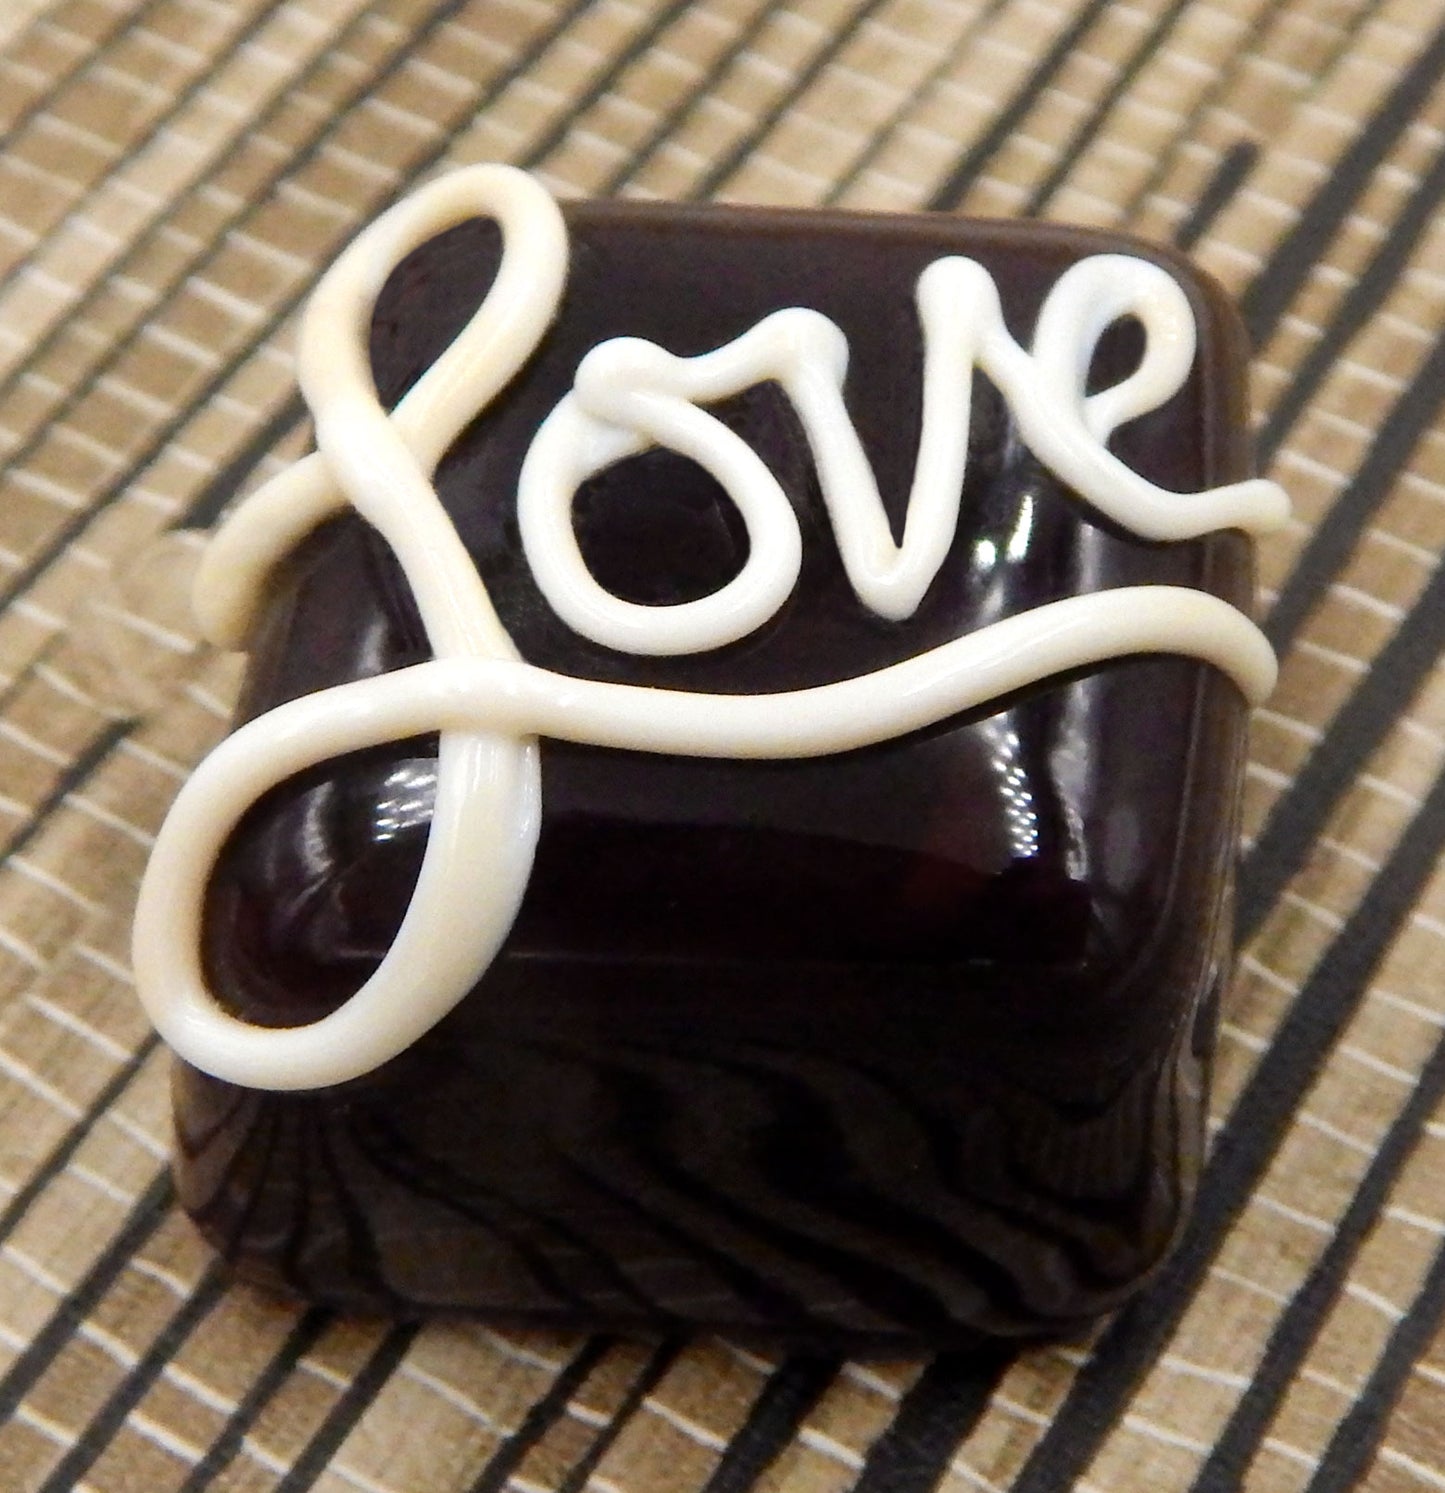 Chocolate & Vanilla "Love" Treat (17-012CV)